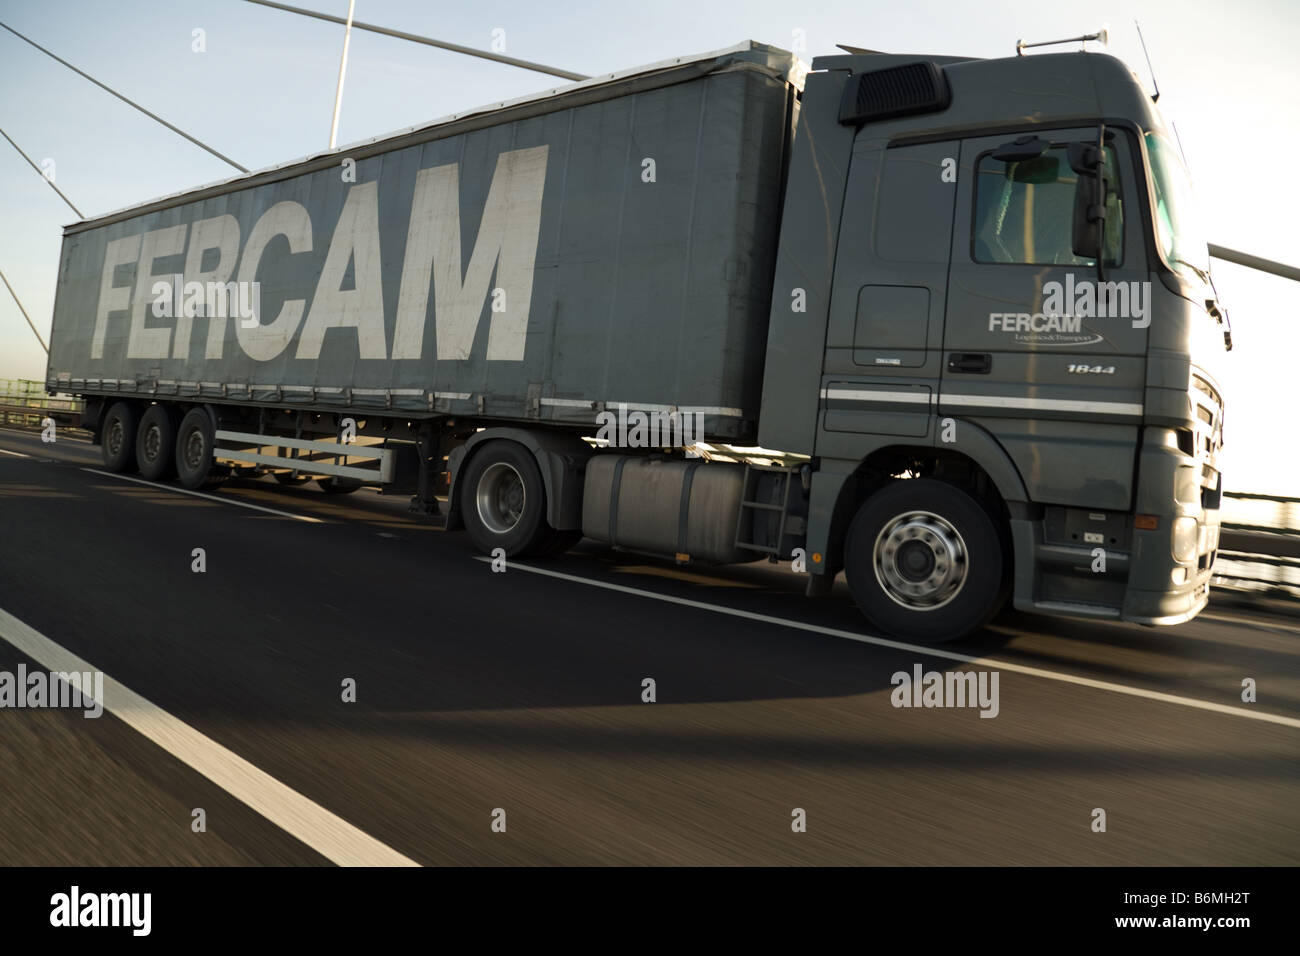 A Fercam lorry on the M25, Queen Elizabeth bridge Dartford crossing UK Stock Photo